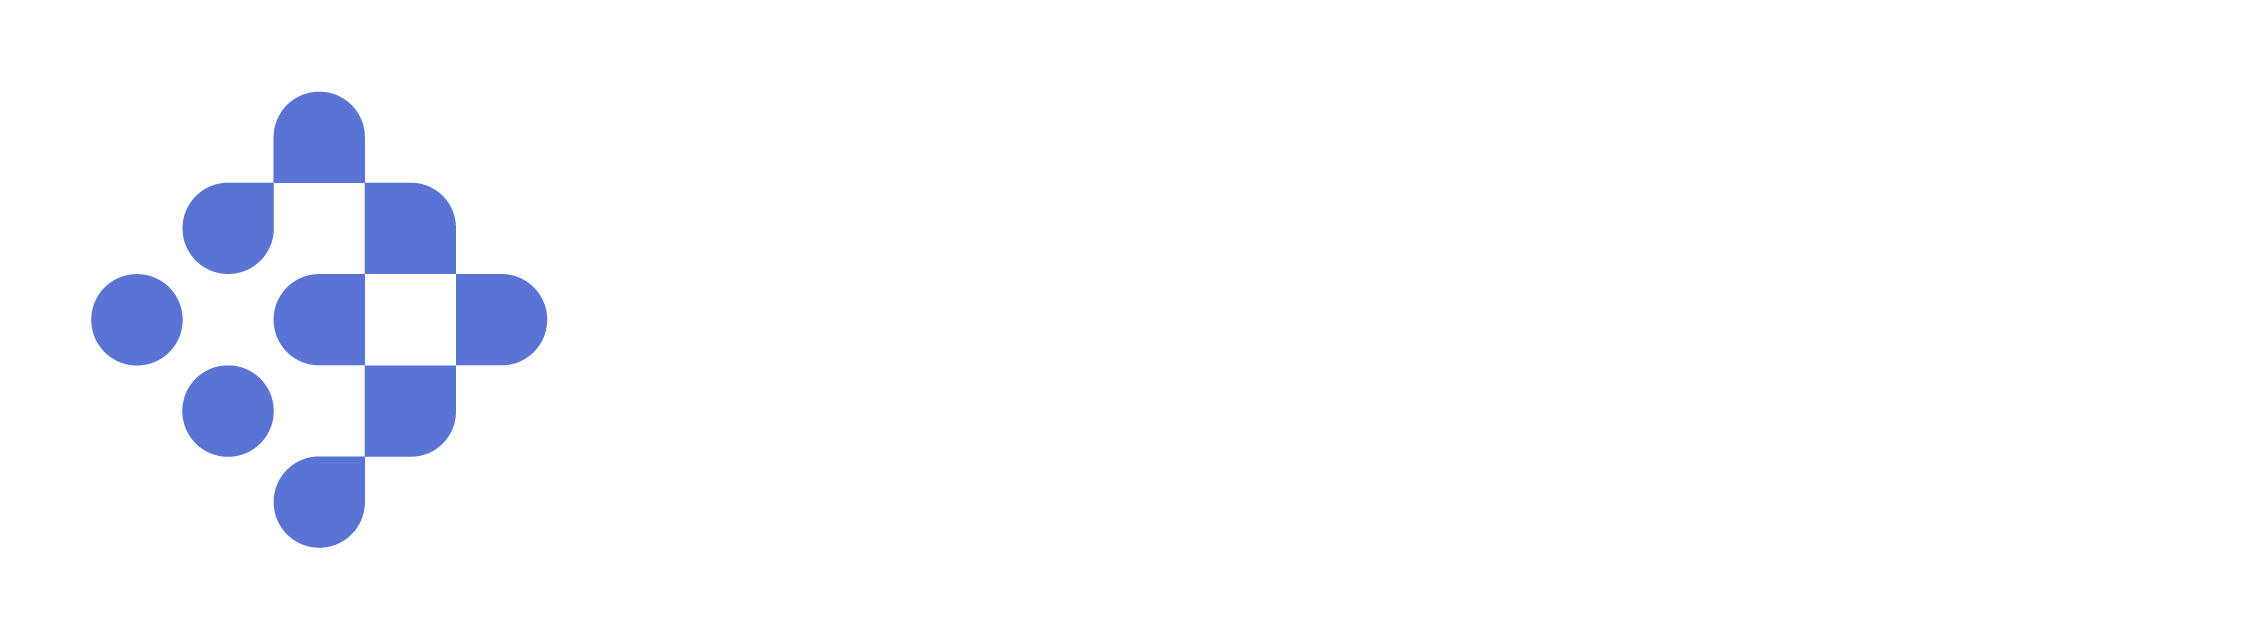 Recruitment and Employment Federation (REC) logo